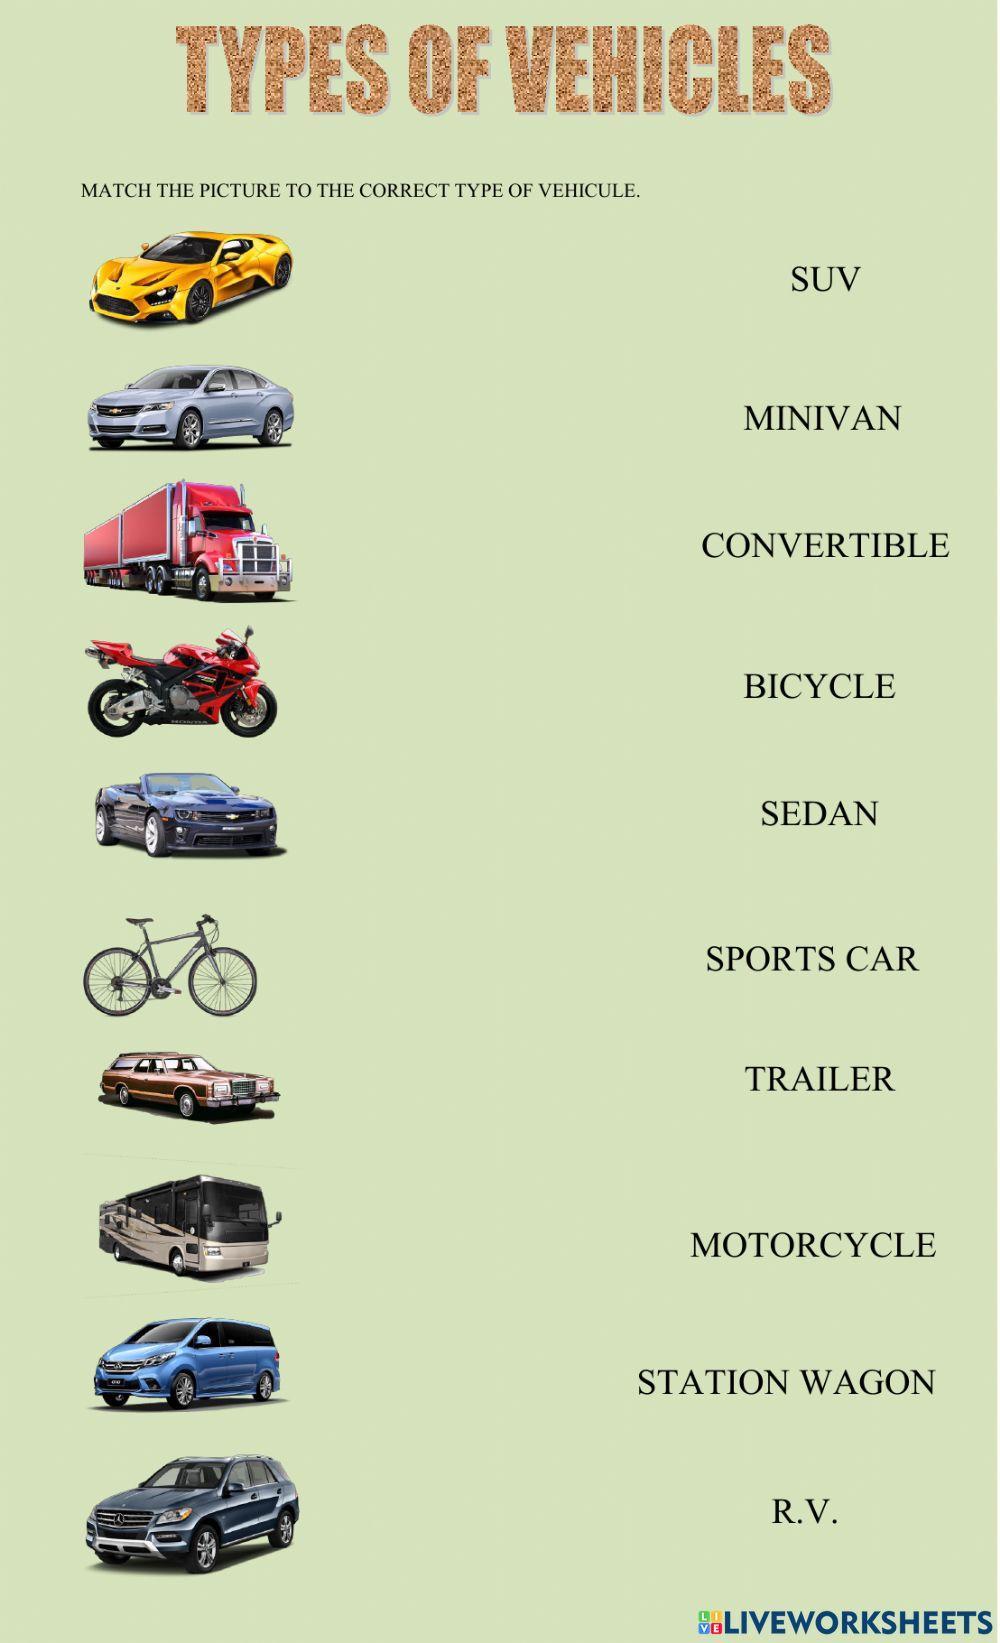 Types of vehicles